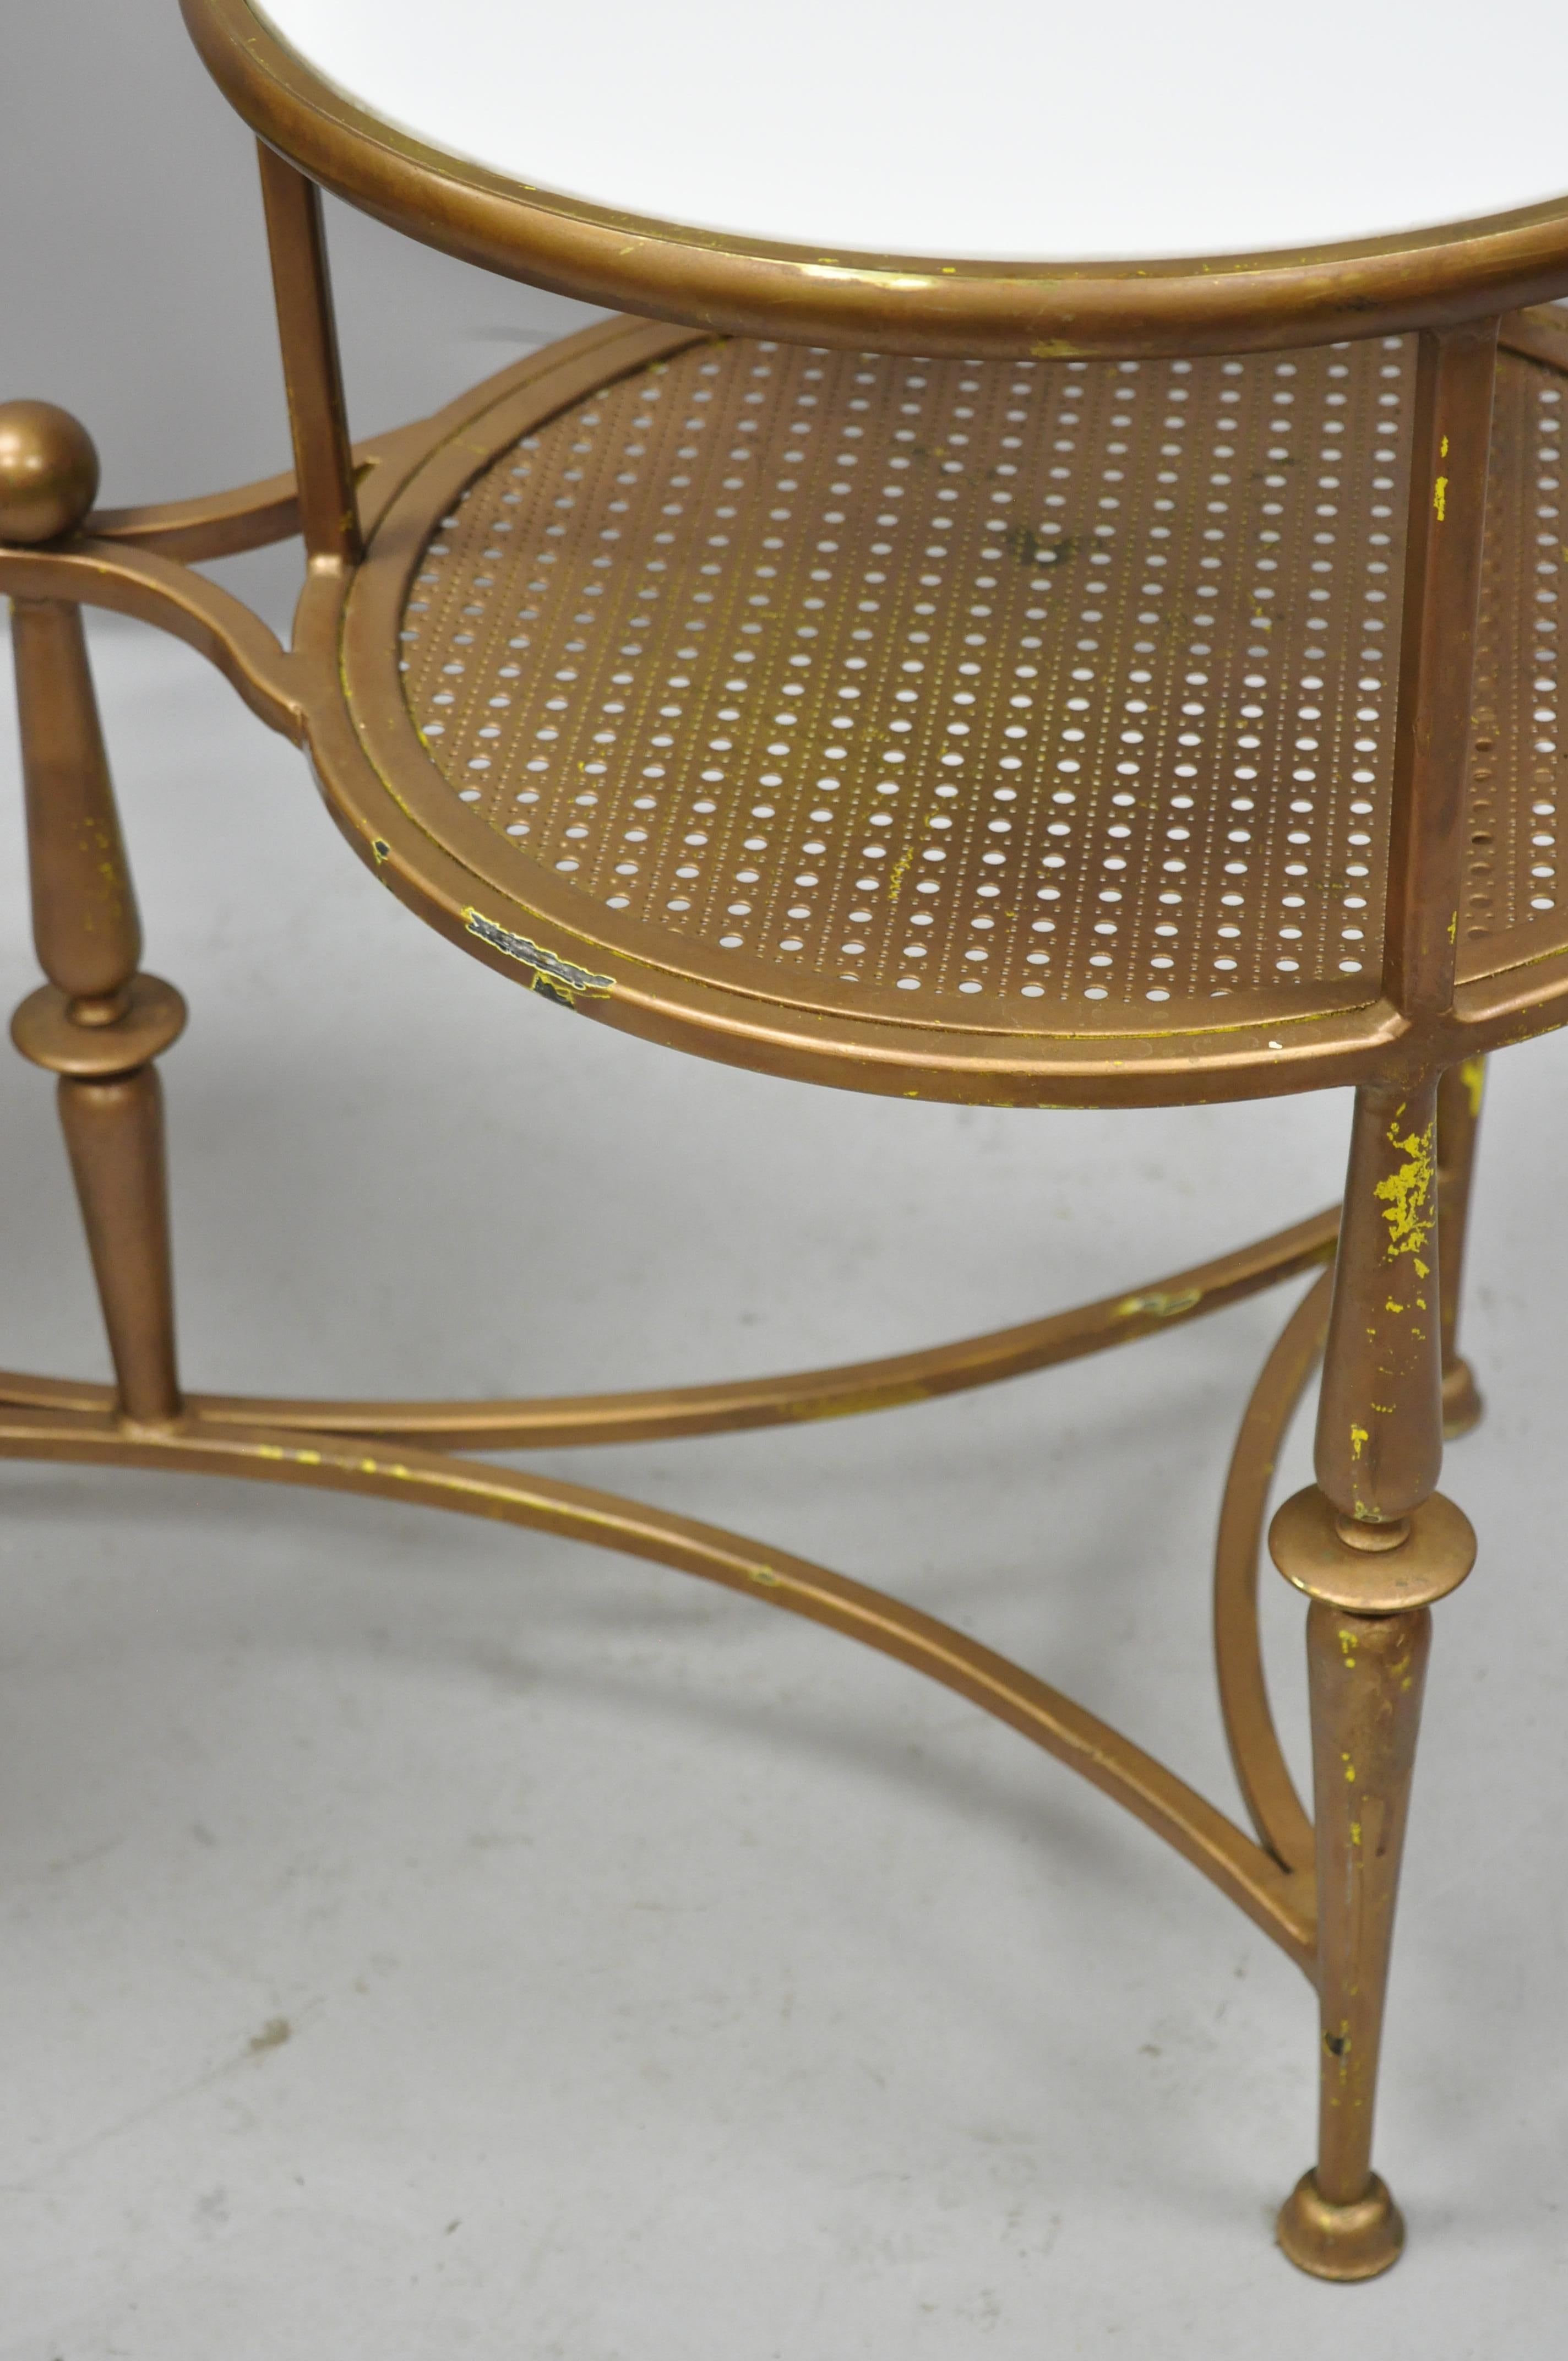 Italian Neoclassical Iron Glass Telephone Stand Gossip Bench Swivel Seat Stool 1